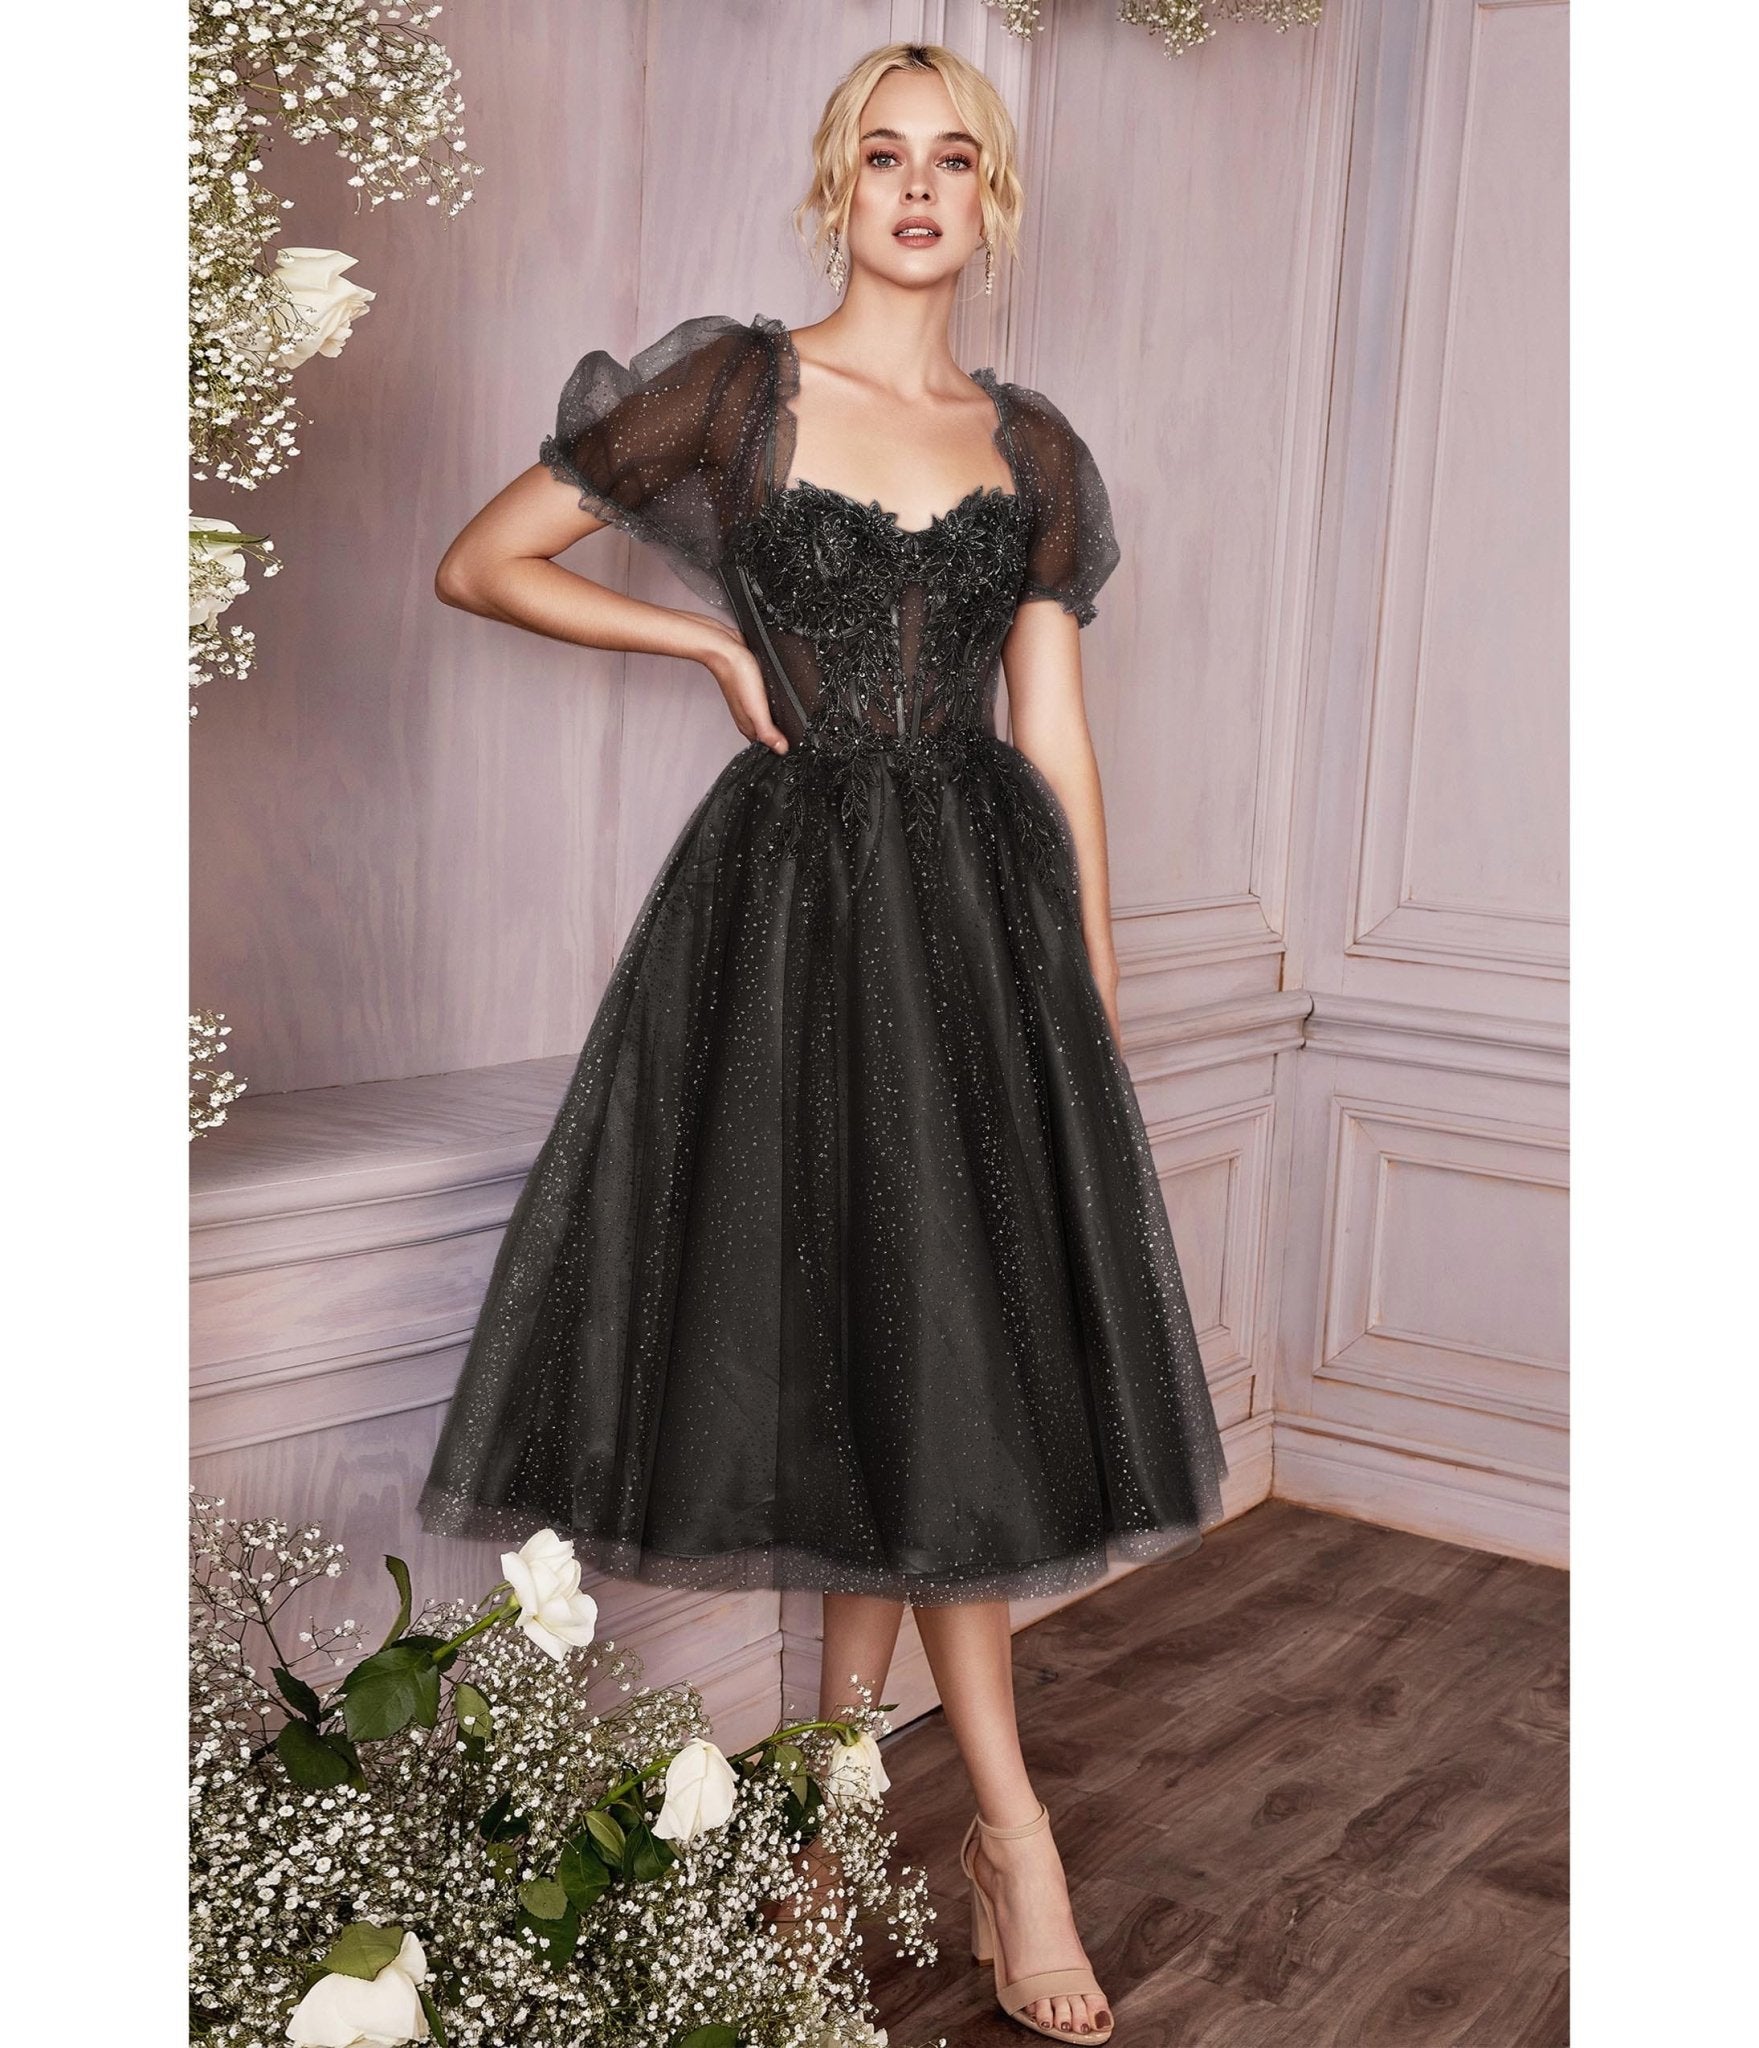 Lace Cape + dress - 50s 60s lace pencil dress with matching cape